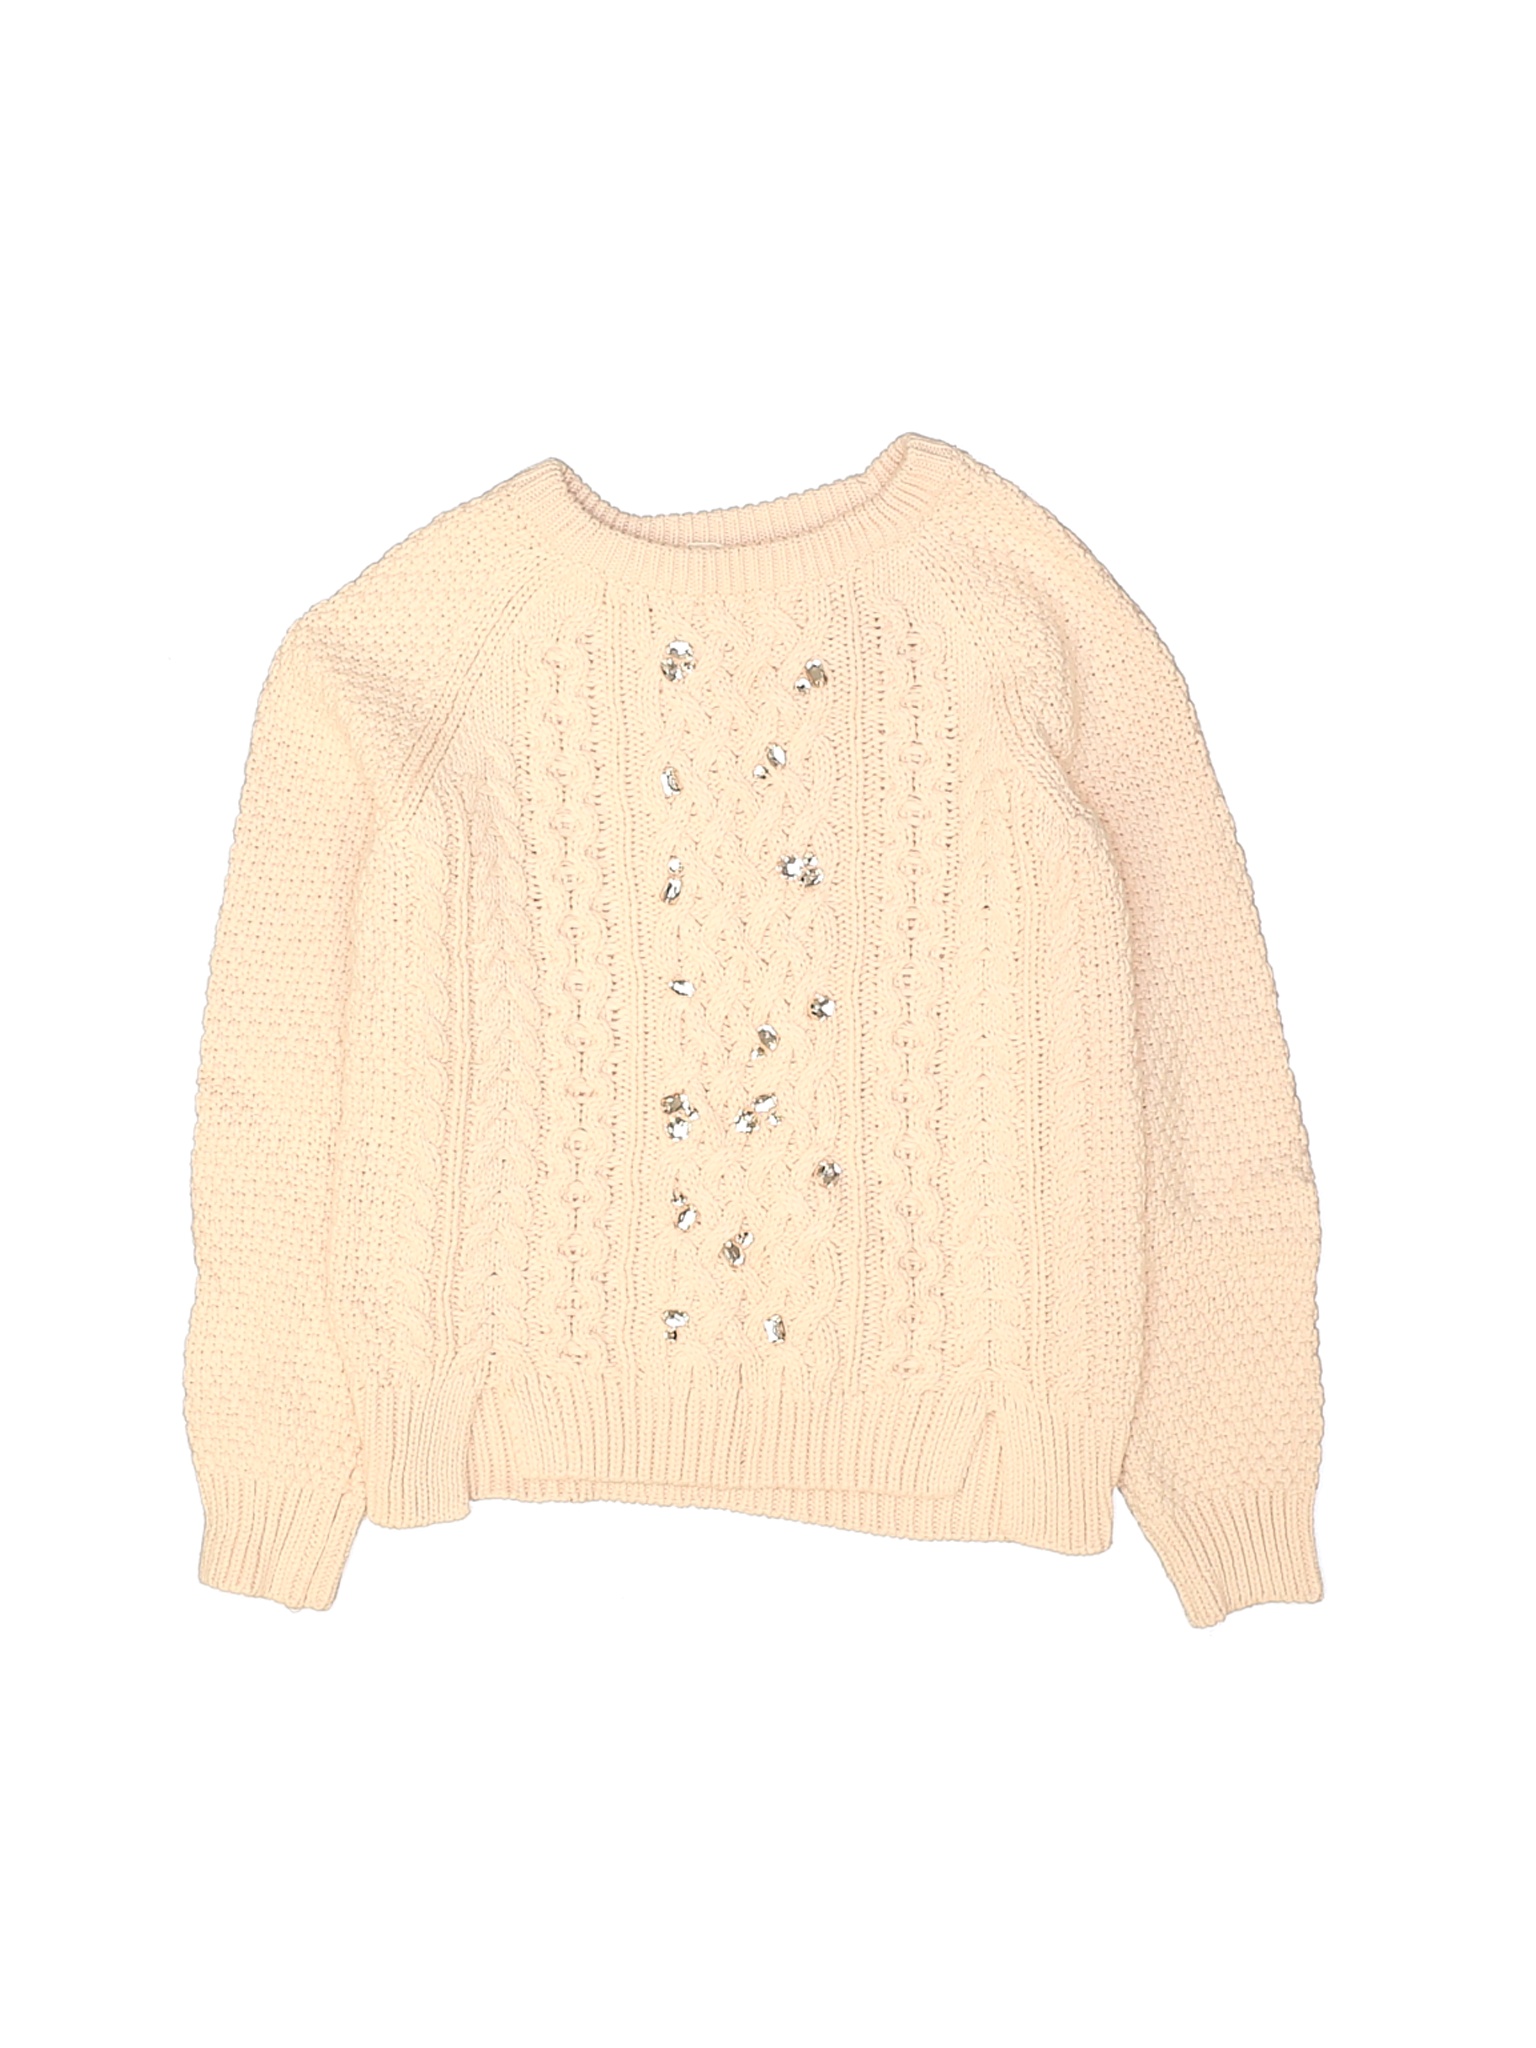 Gap Kids Boys Brown Pullover Sweater 8 | eBay